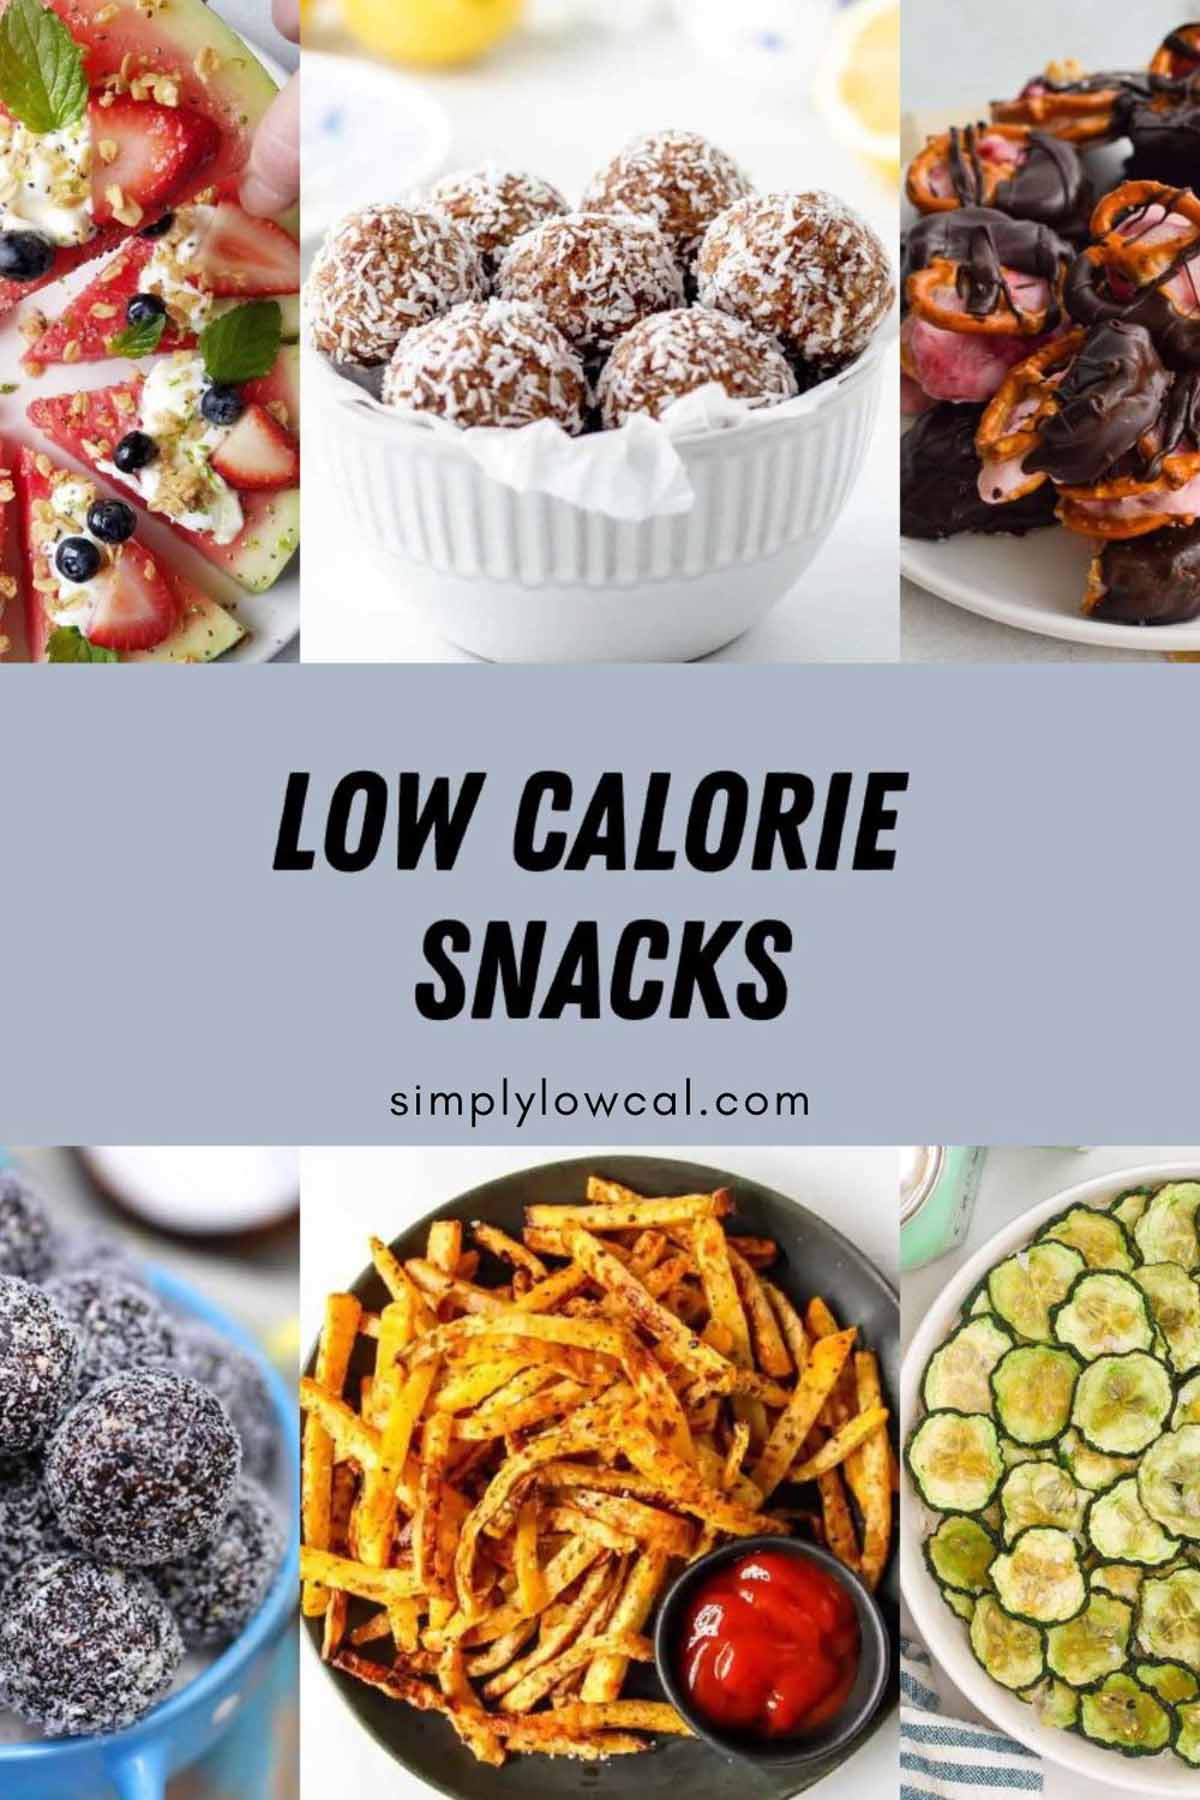 Low calorie snacks pin.